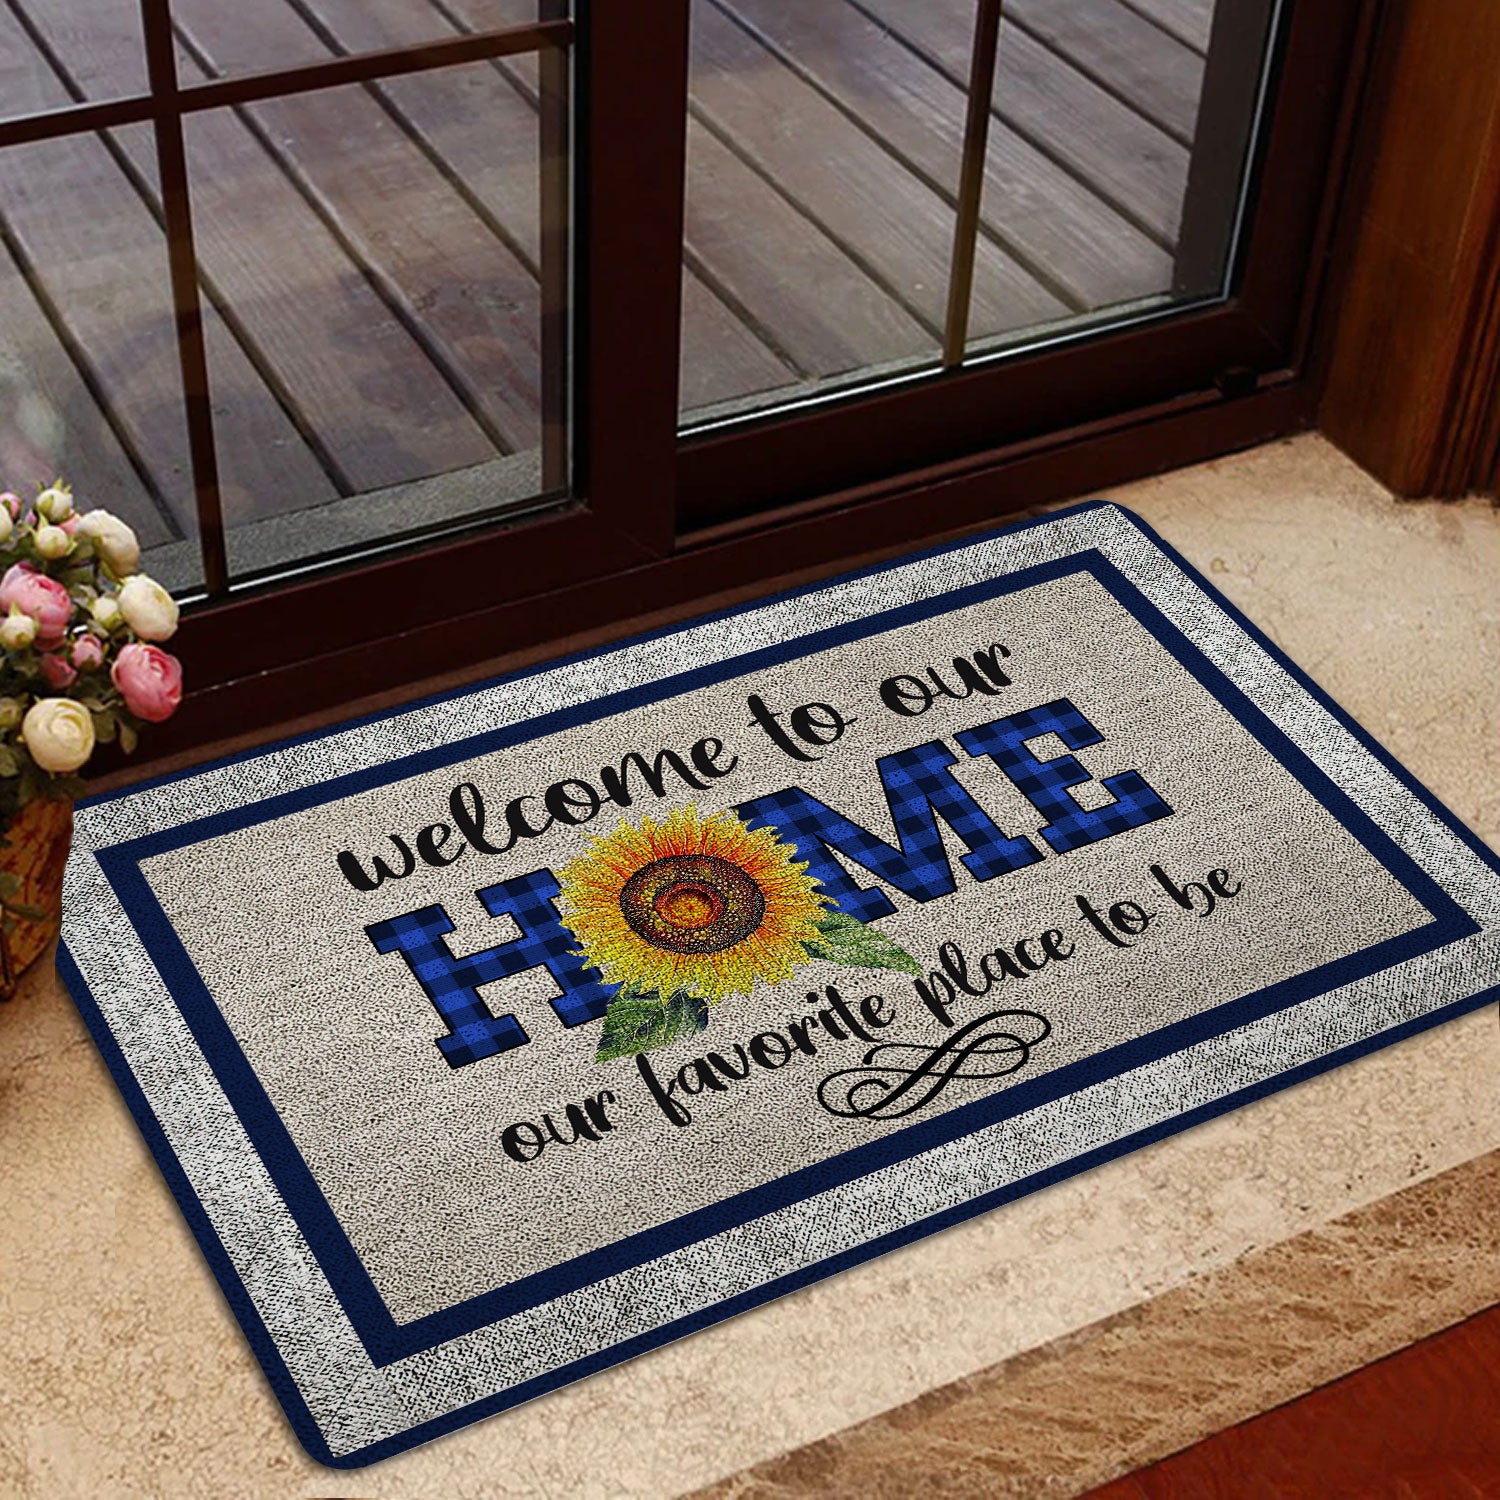 Ohaprints-Doormat-Outdoor-Indoor-Welcome-To-Our-Home-Sunflower-Blue-Plaid-Pattern-Rubber-Door-Mat-1963-